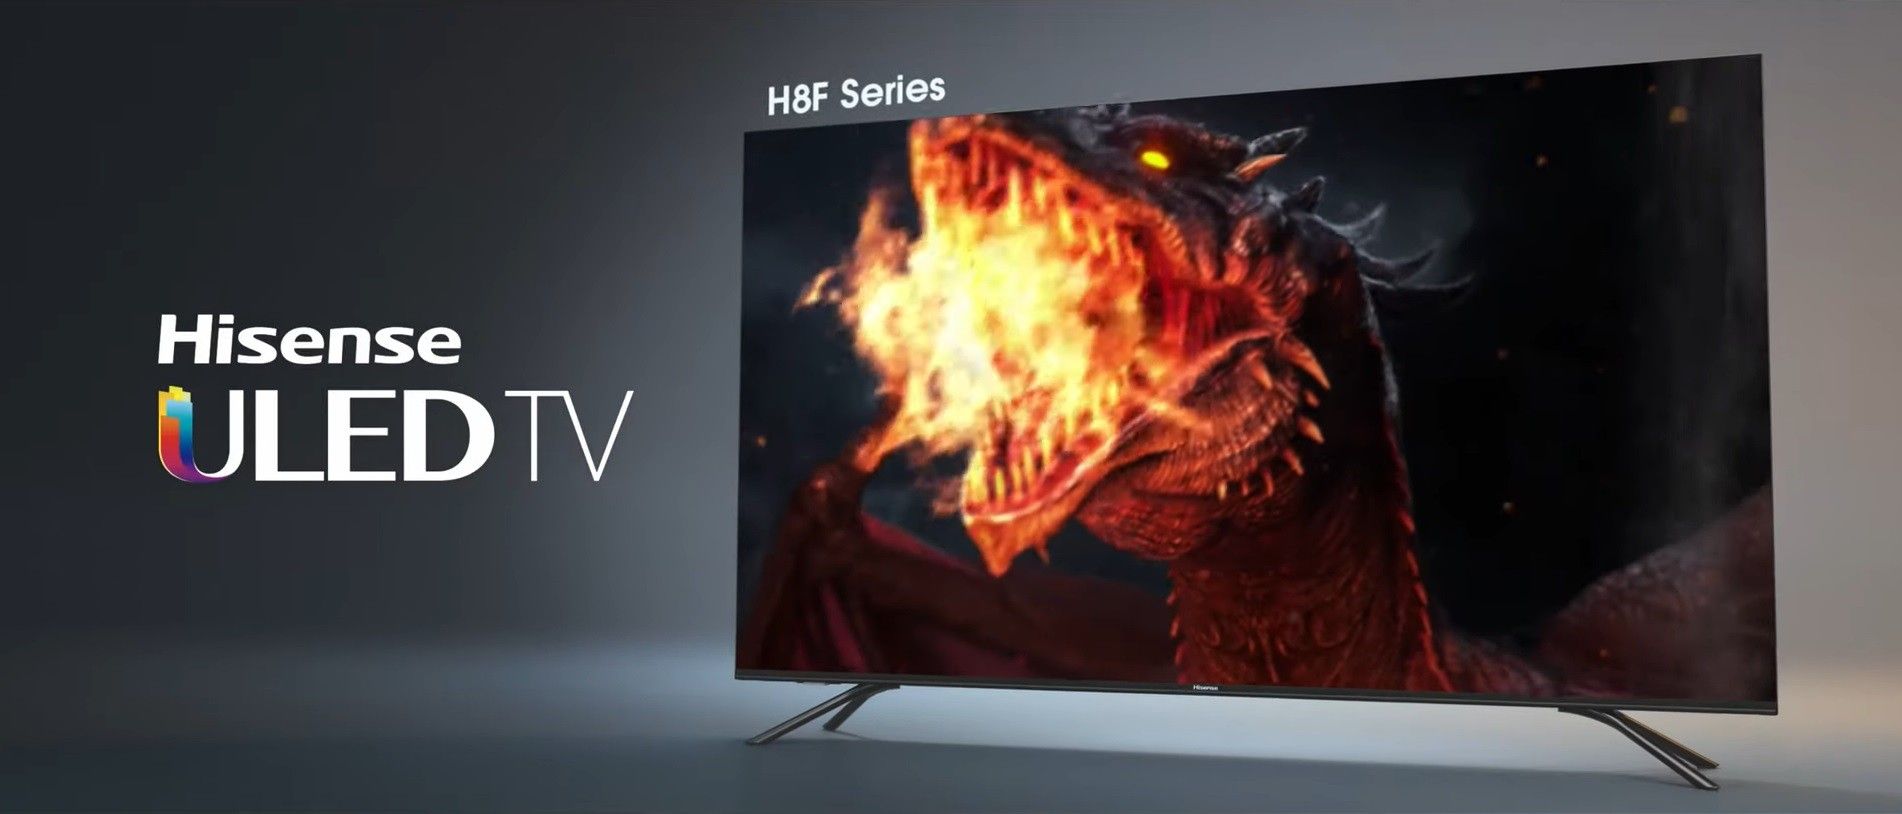 Hisense H8 Quantum Series Android 4K ULED Smart TV Featured